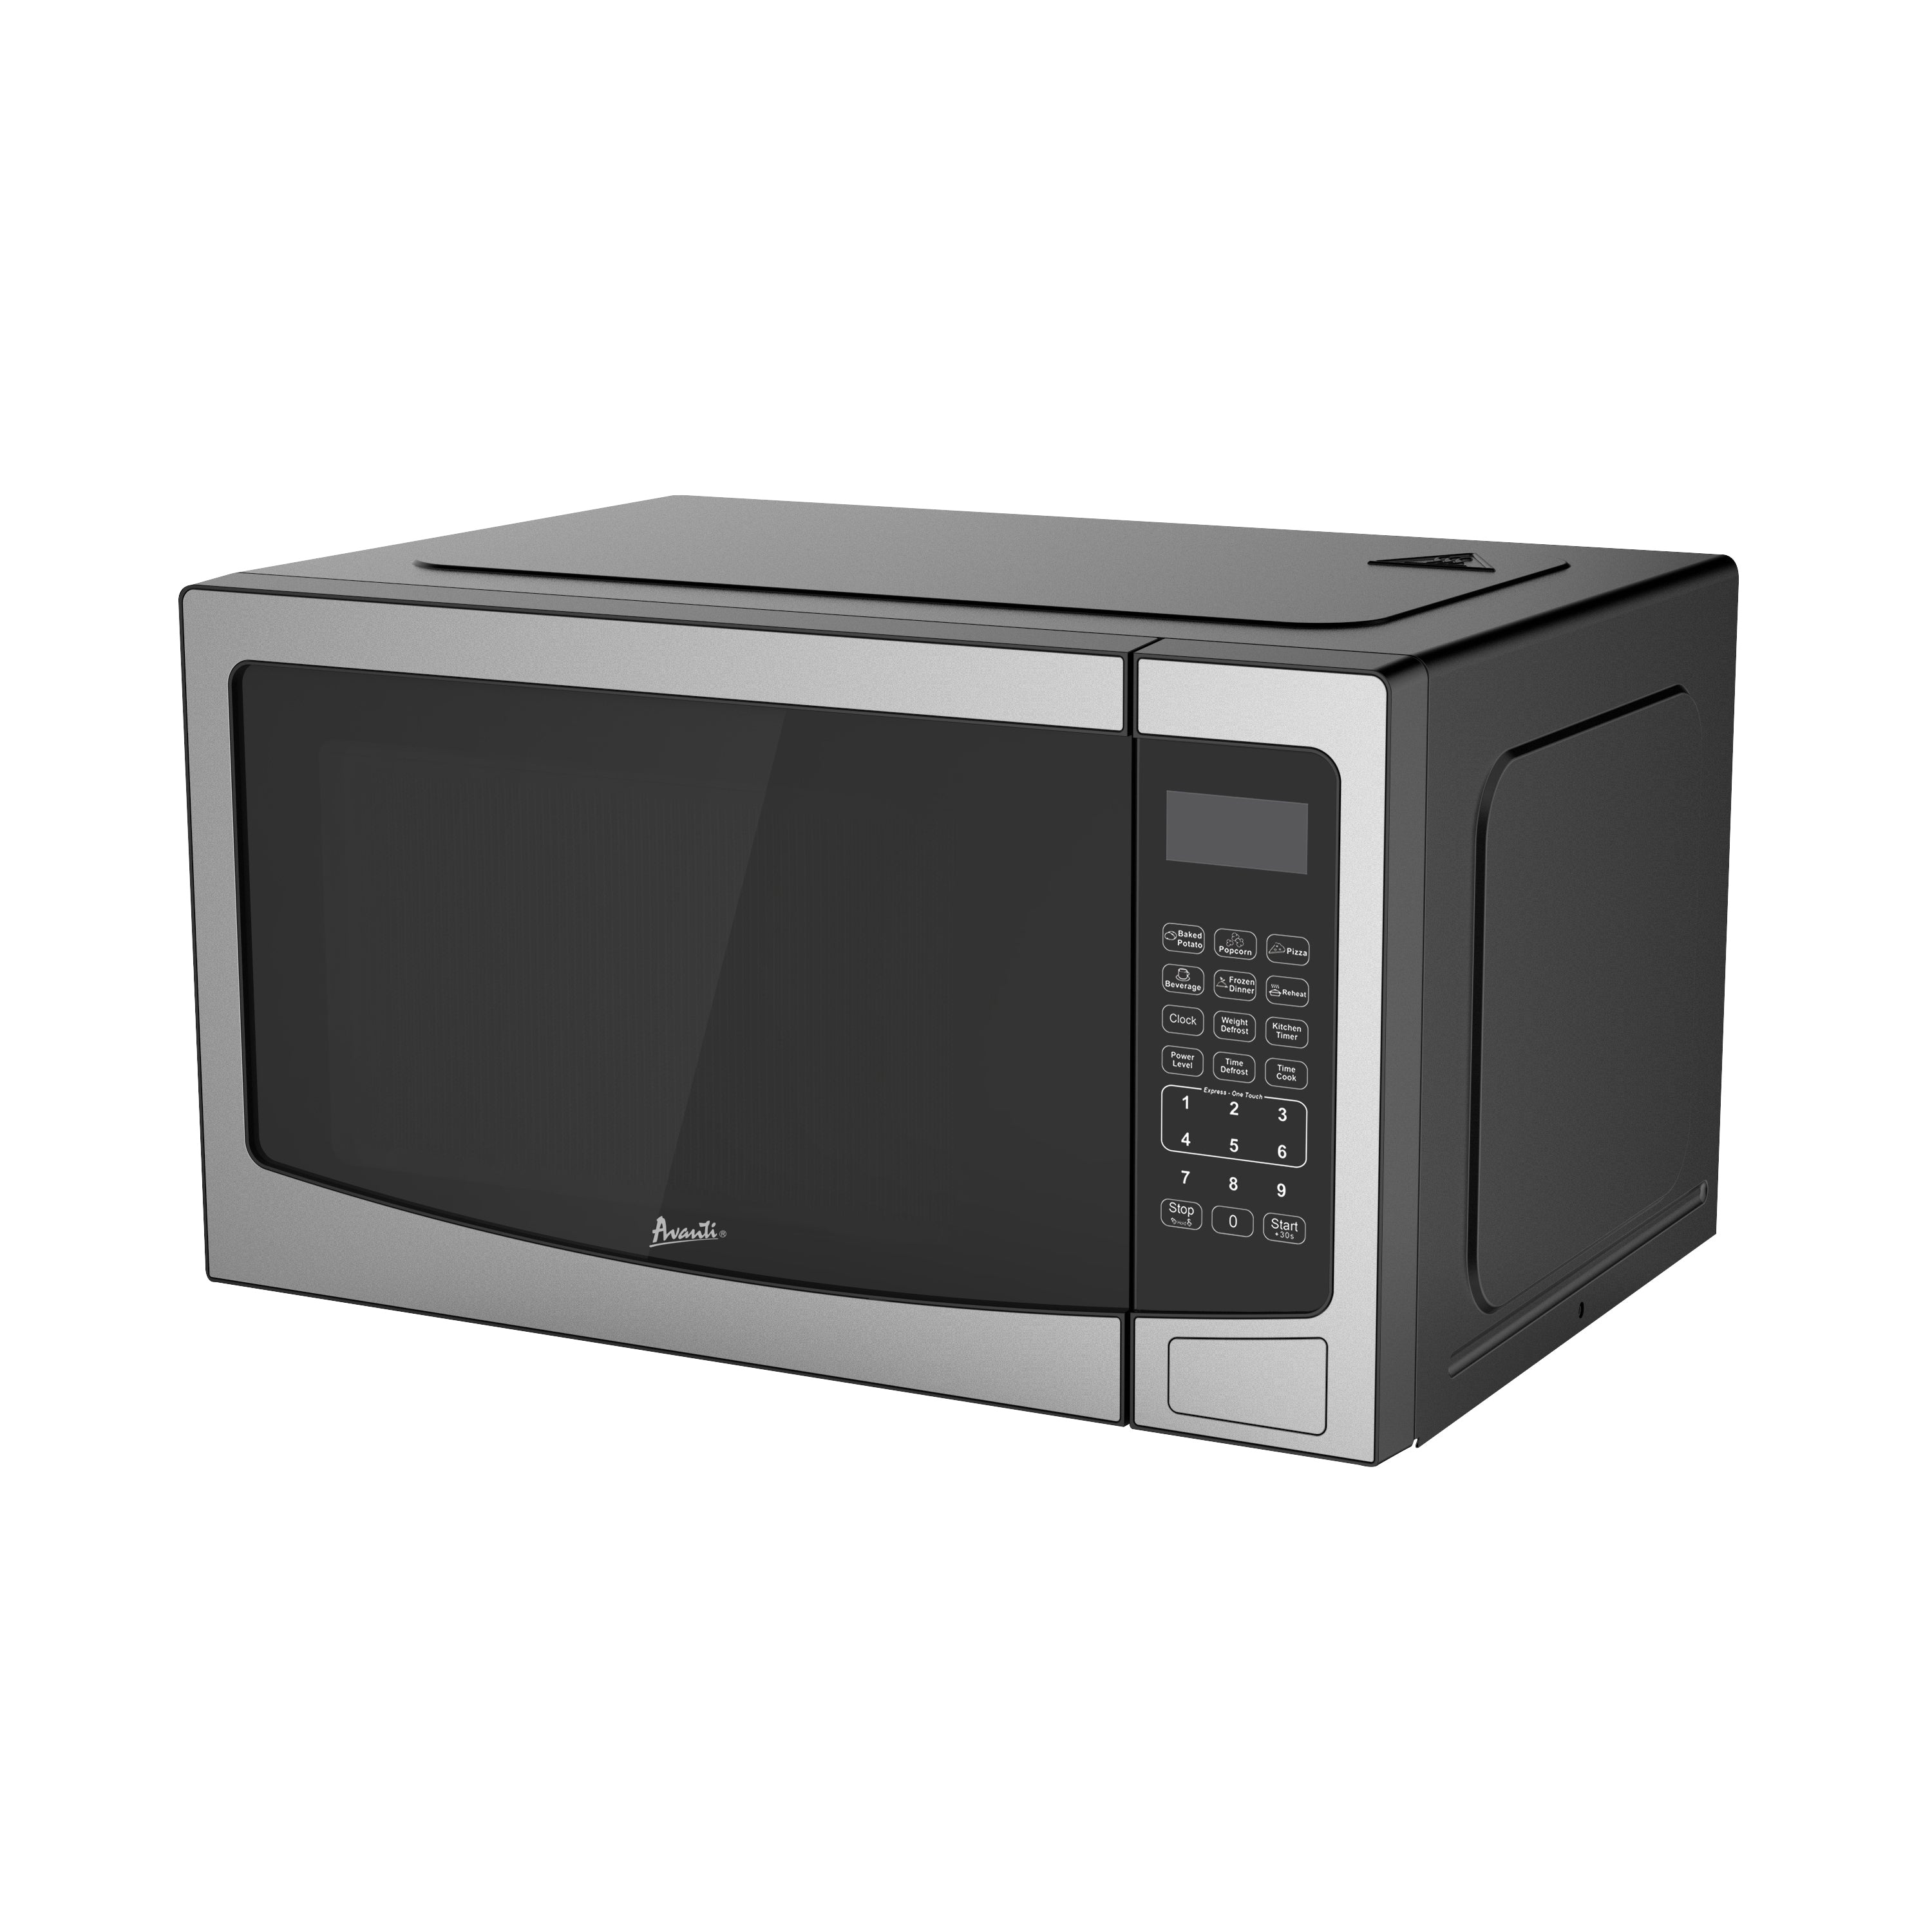 Avanti - MT115V3S, Avanti Microwave Oven, 1.1 cu. ft. Capacity, in Stainless Steel